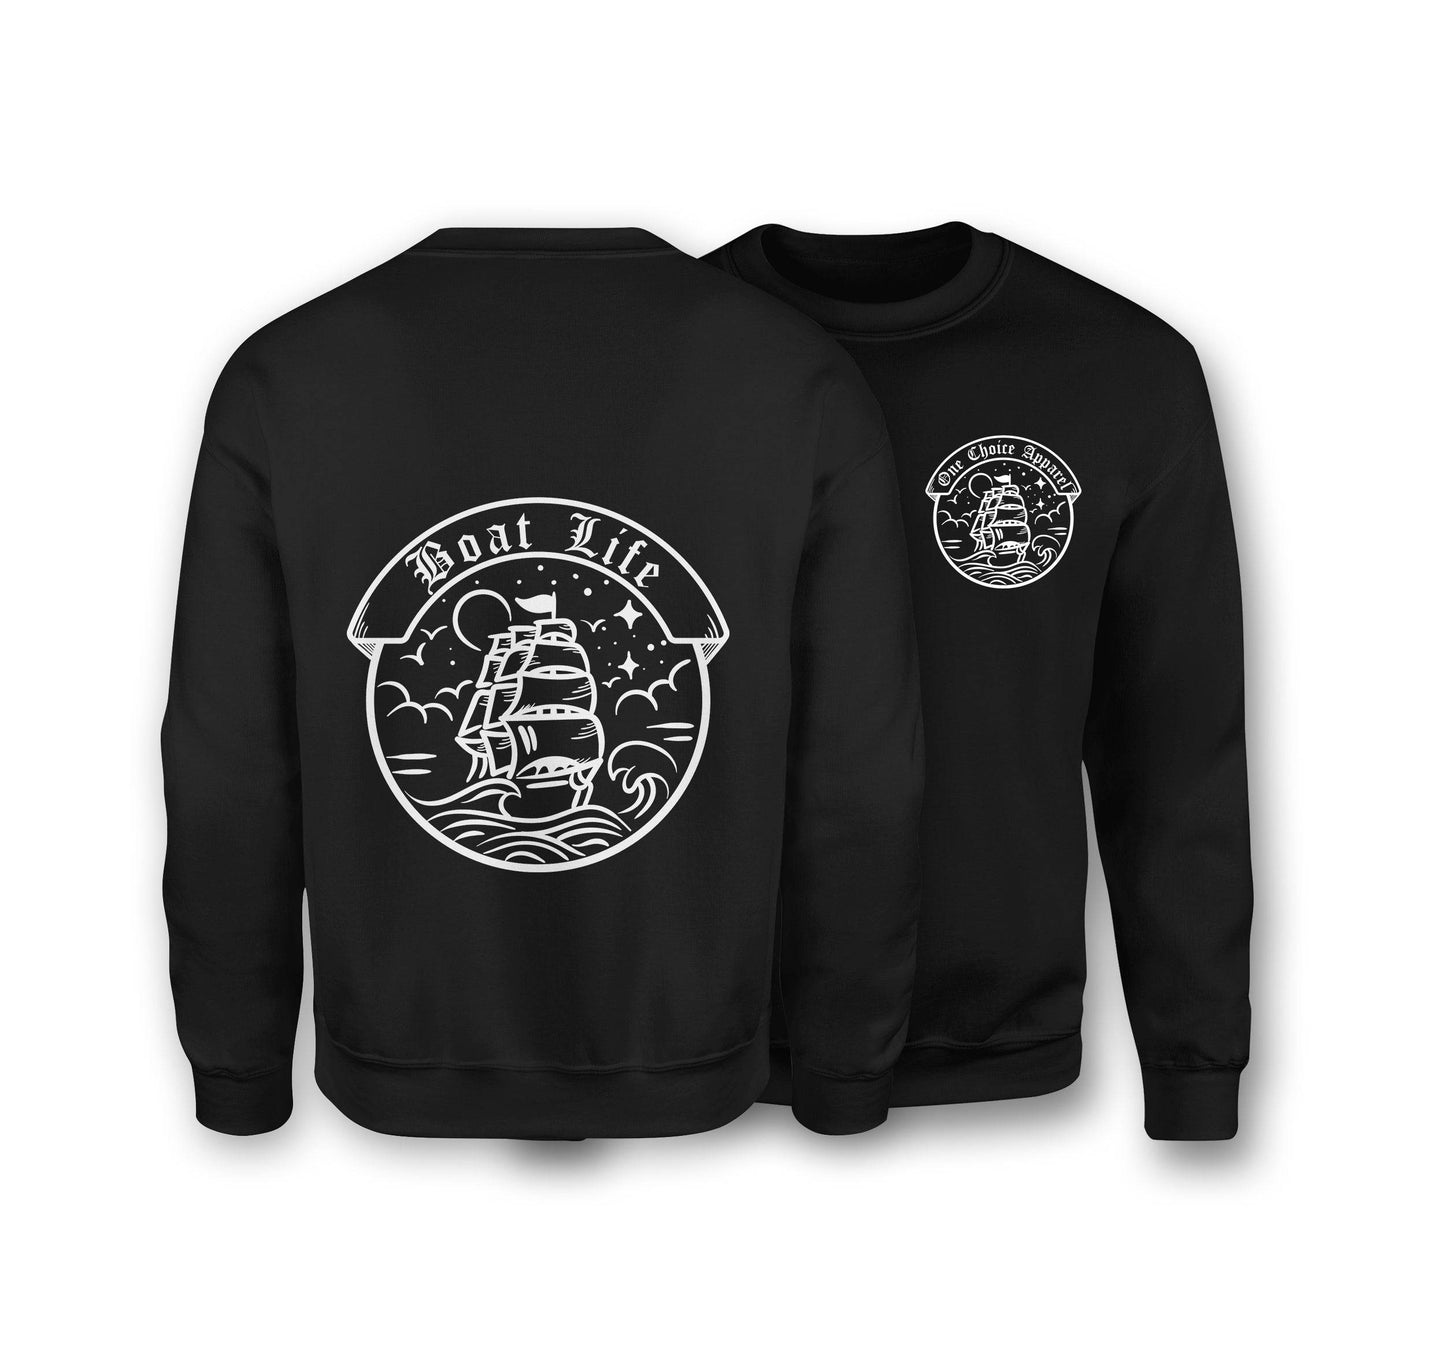 Boat Life Sweatshirt - Organic Cotton Sweatshirt - One Choice Apparel